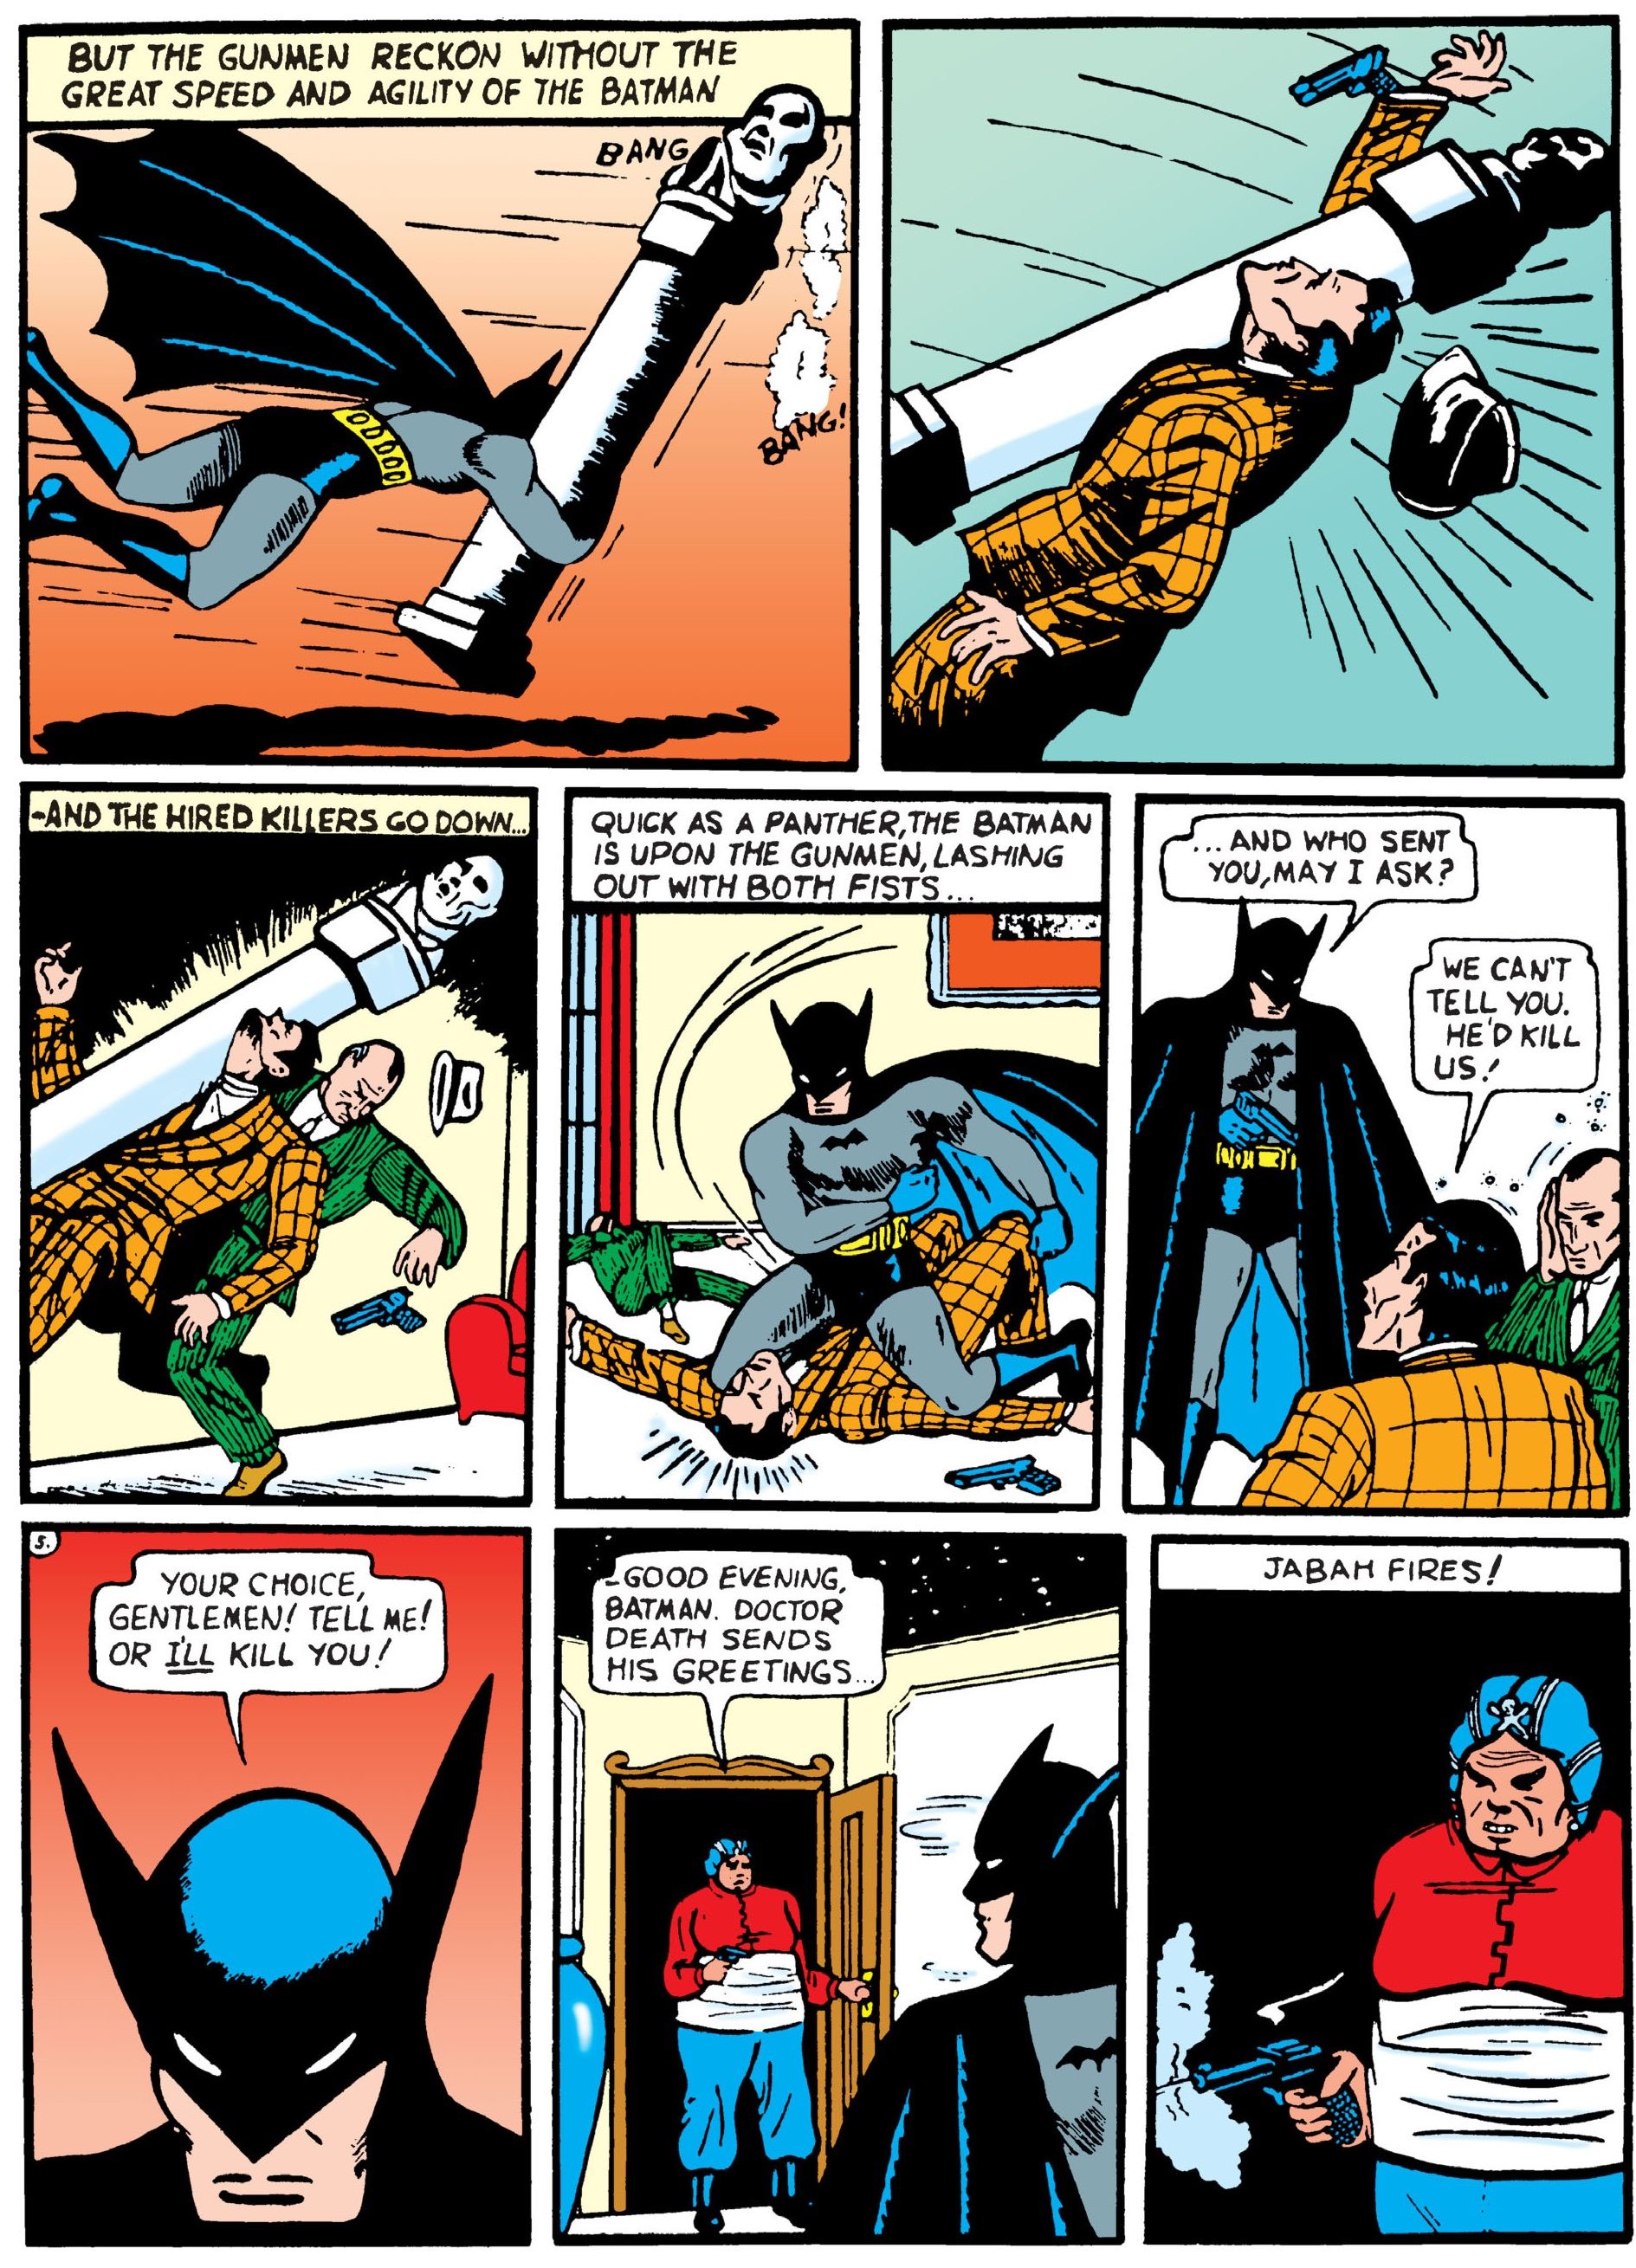 Batman está acorralado por Jabah